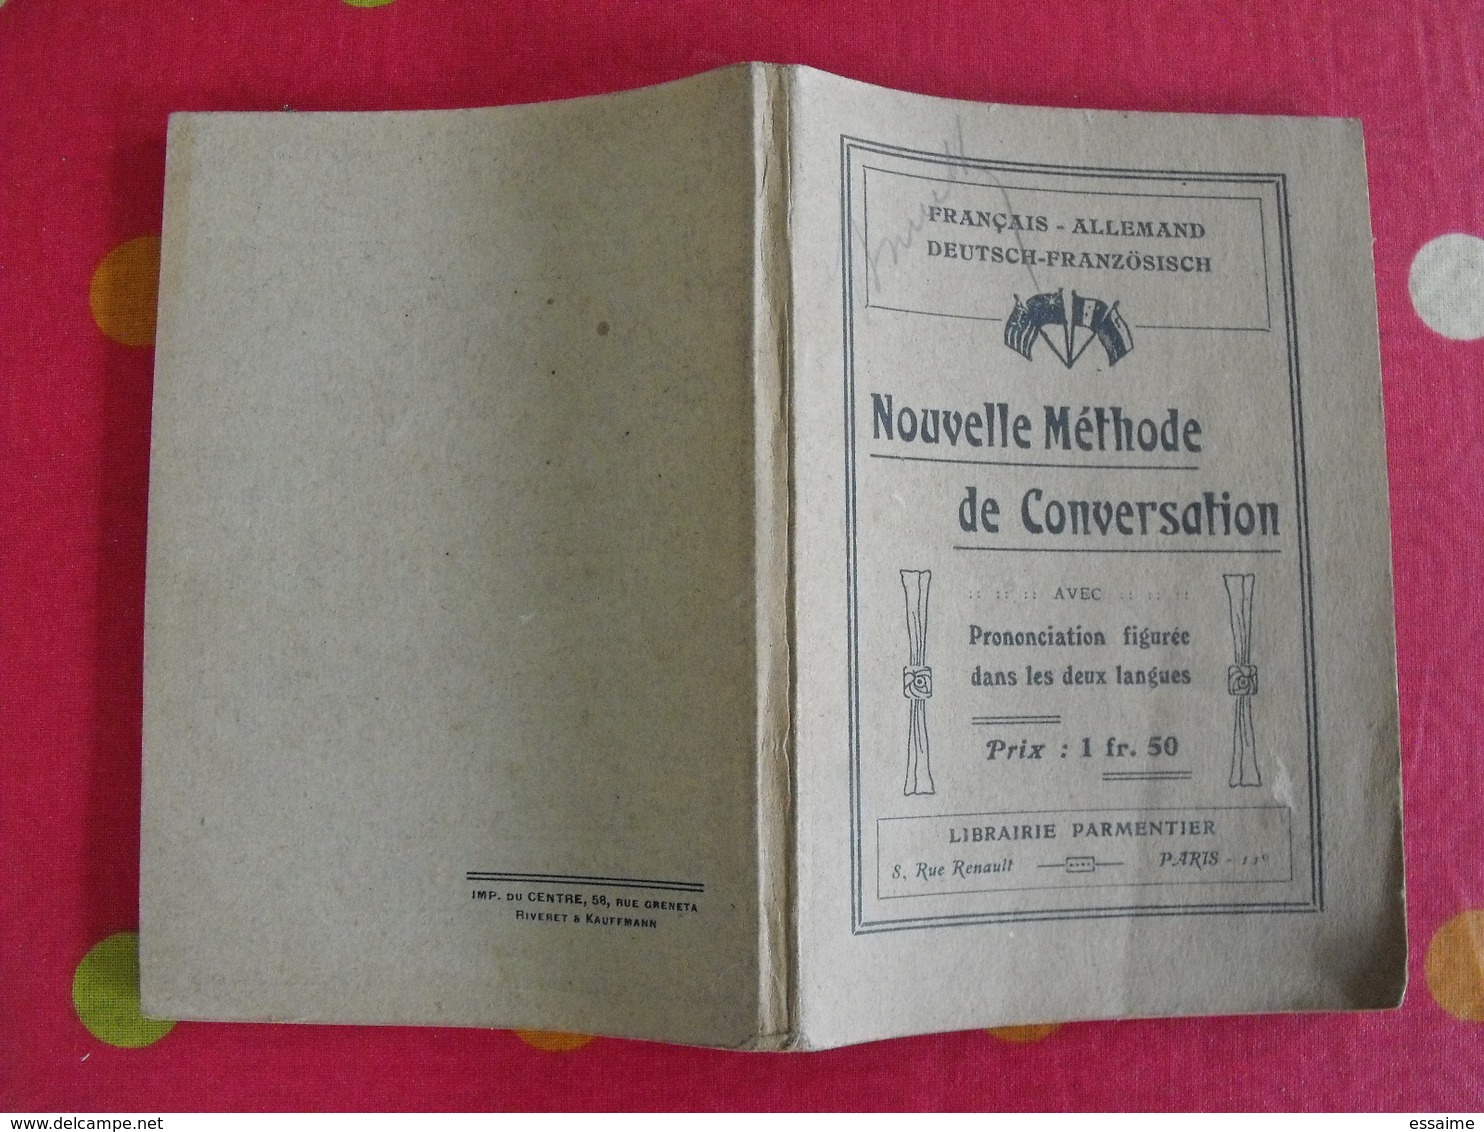 Nouvelle Méthode De Conversation Français-allemand, Deutsch-französisch. Parmentier 1919 + Calendrier - 18+ Years Old